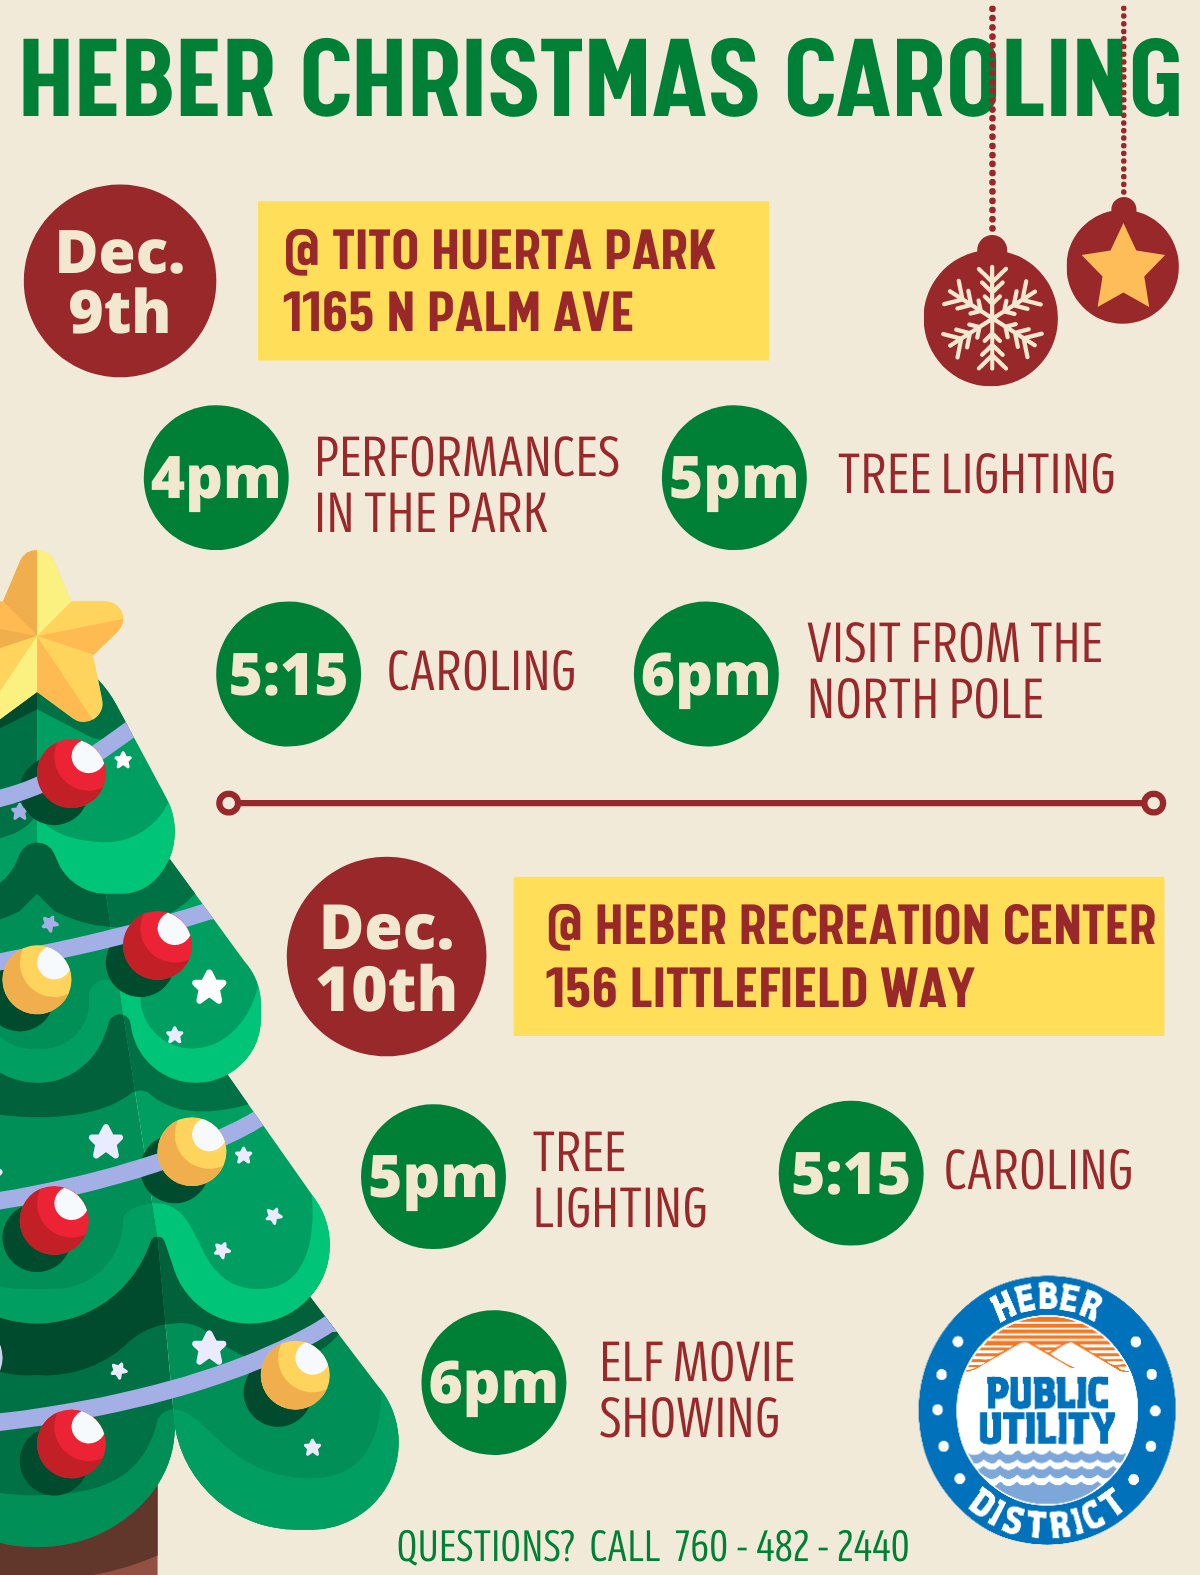 HPUD Christmas Caroling & Tree Lighting 2021